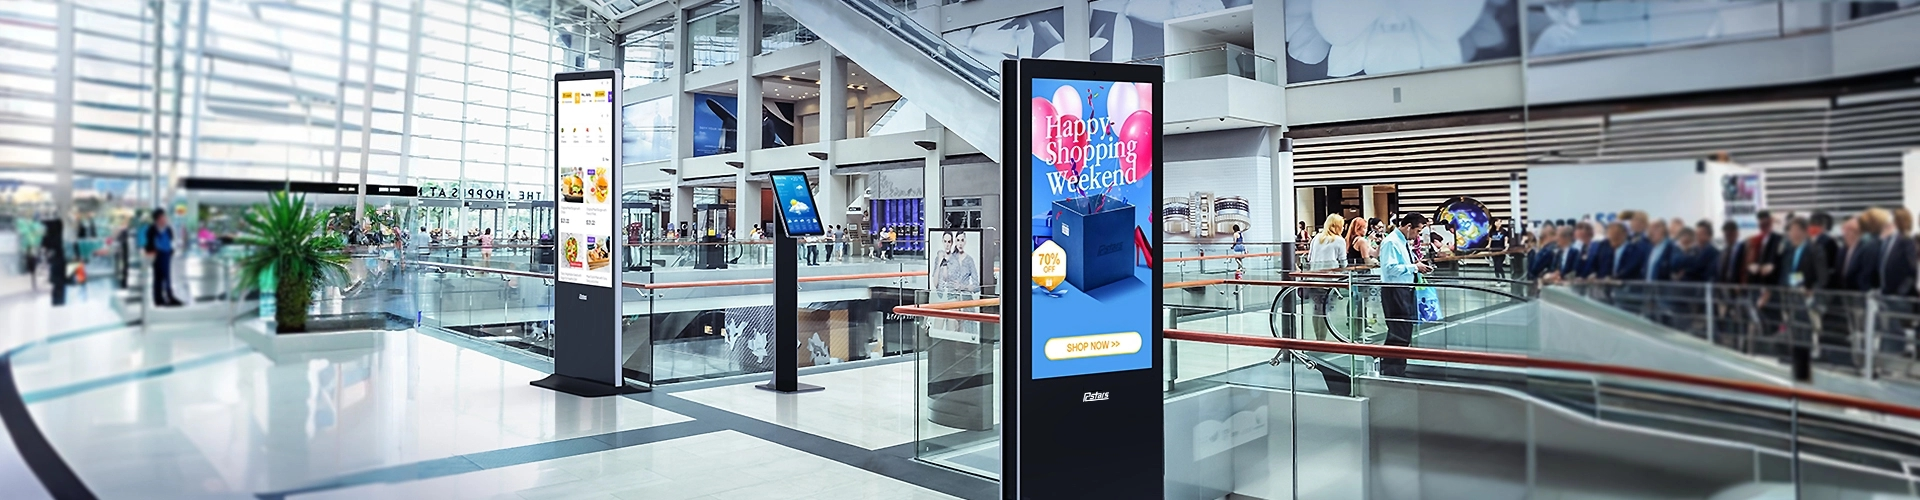 23.6 inch Standing LCD Circular Screen Digital Wayfinding Kiosk